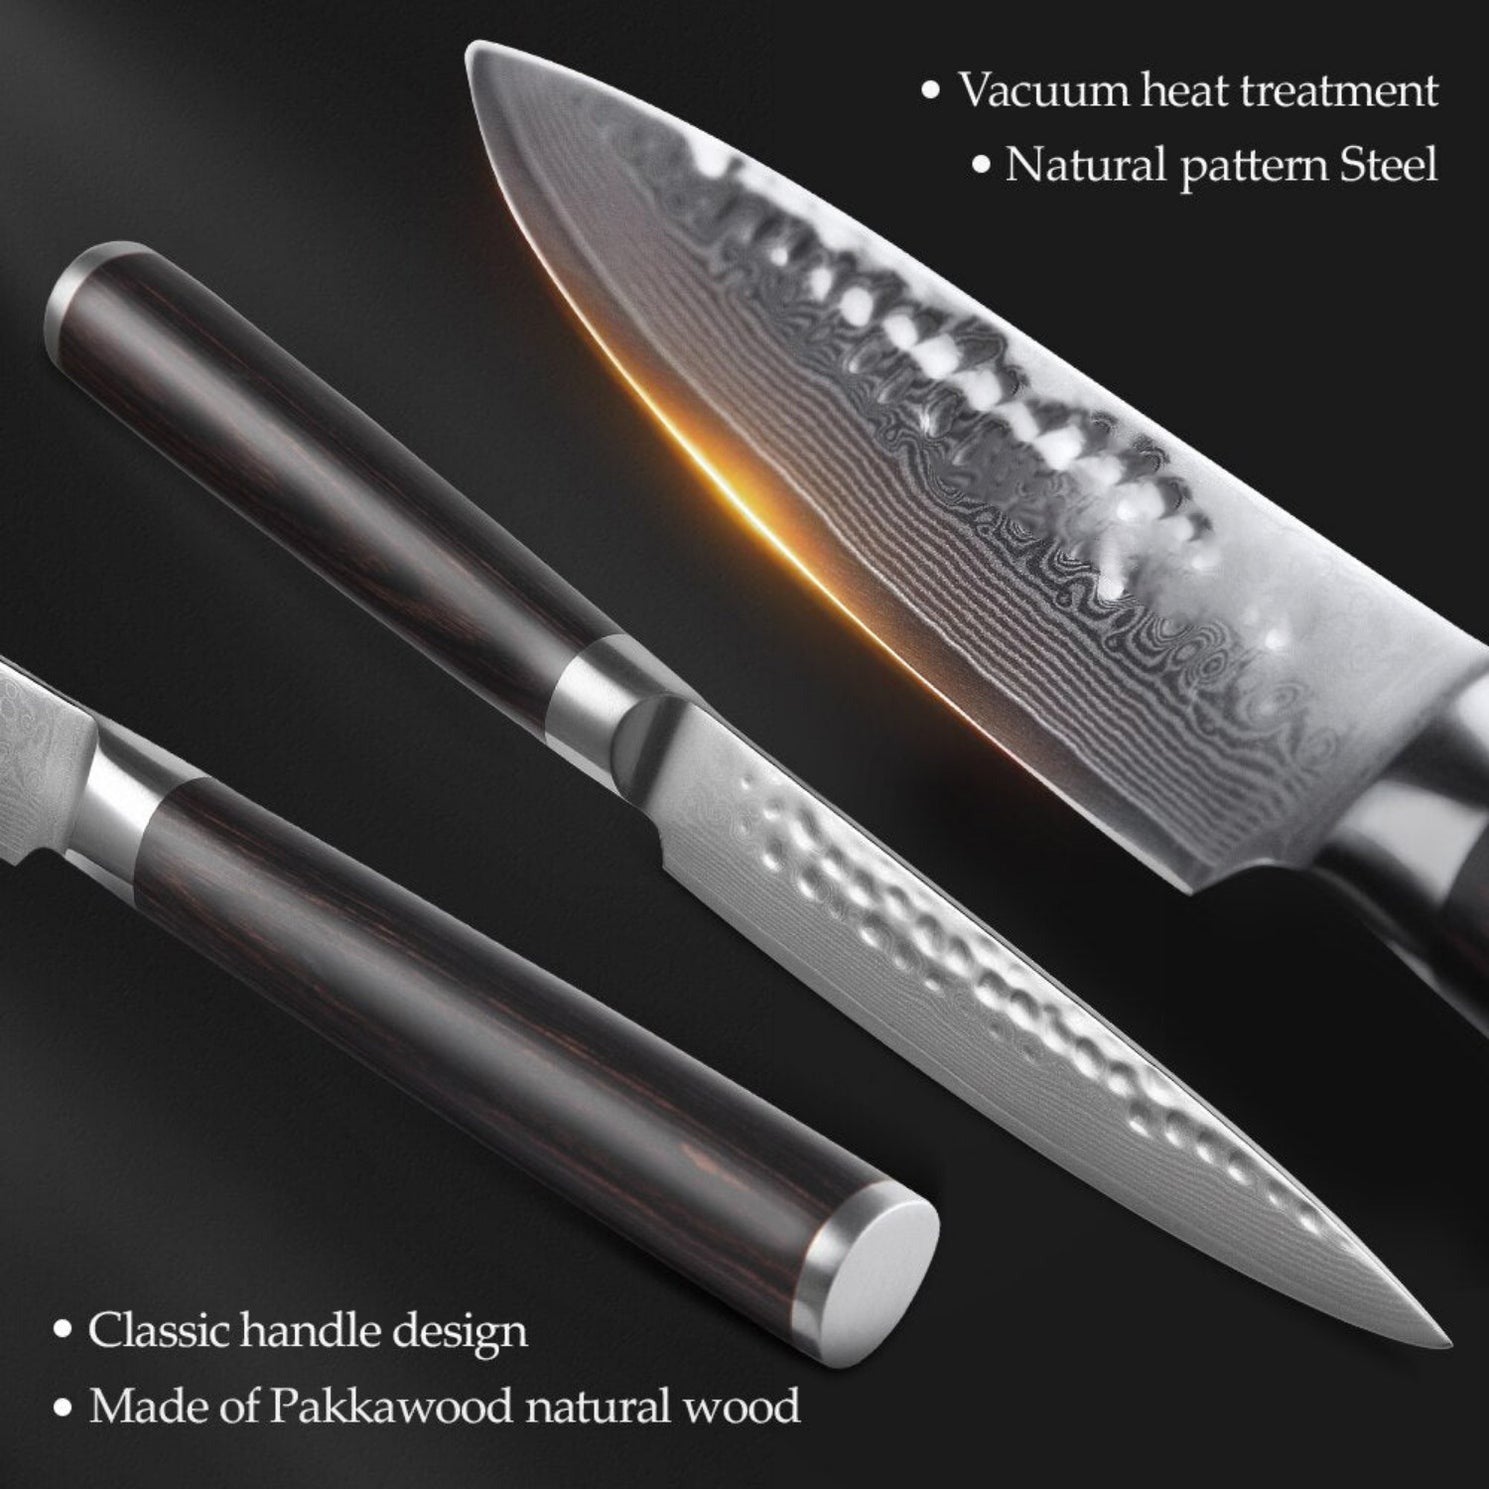 "B1Z 2pcs Knife Set 1 pc 8 inch chef knife, 1 pc 5 inch utility knife 67 Layers Damascus steel having Nature ebony Wood Handle